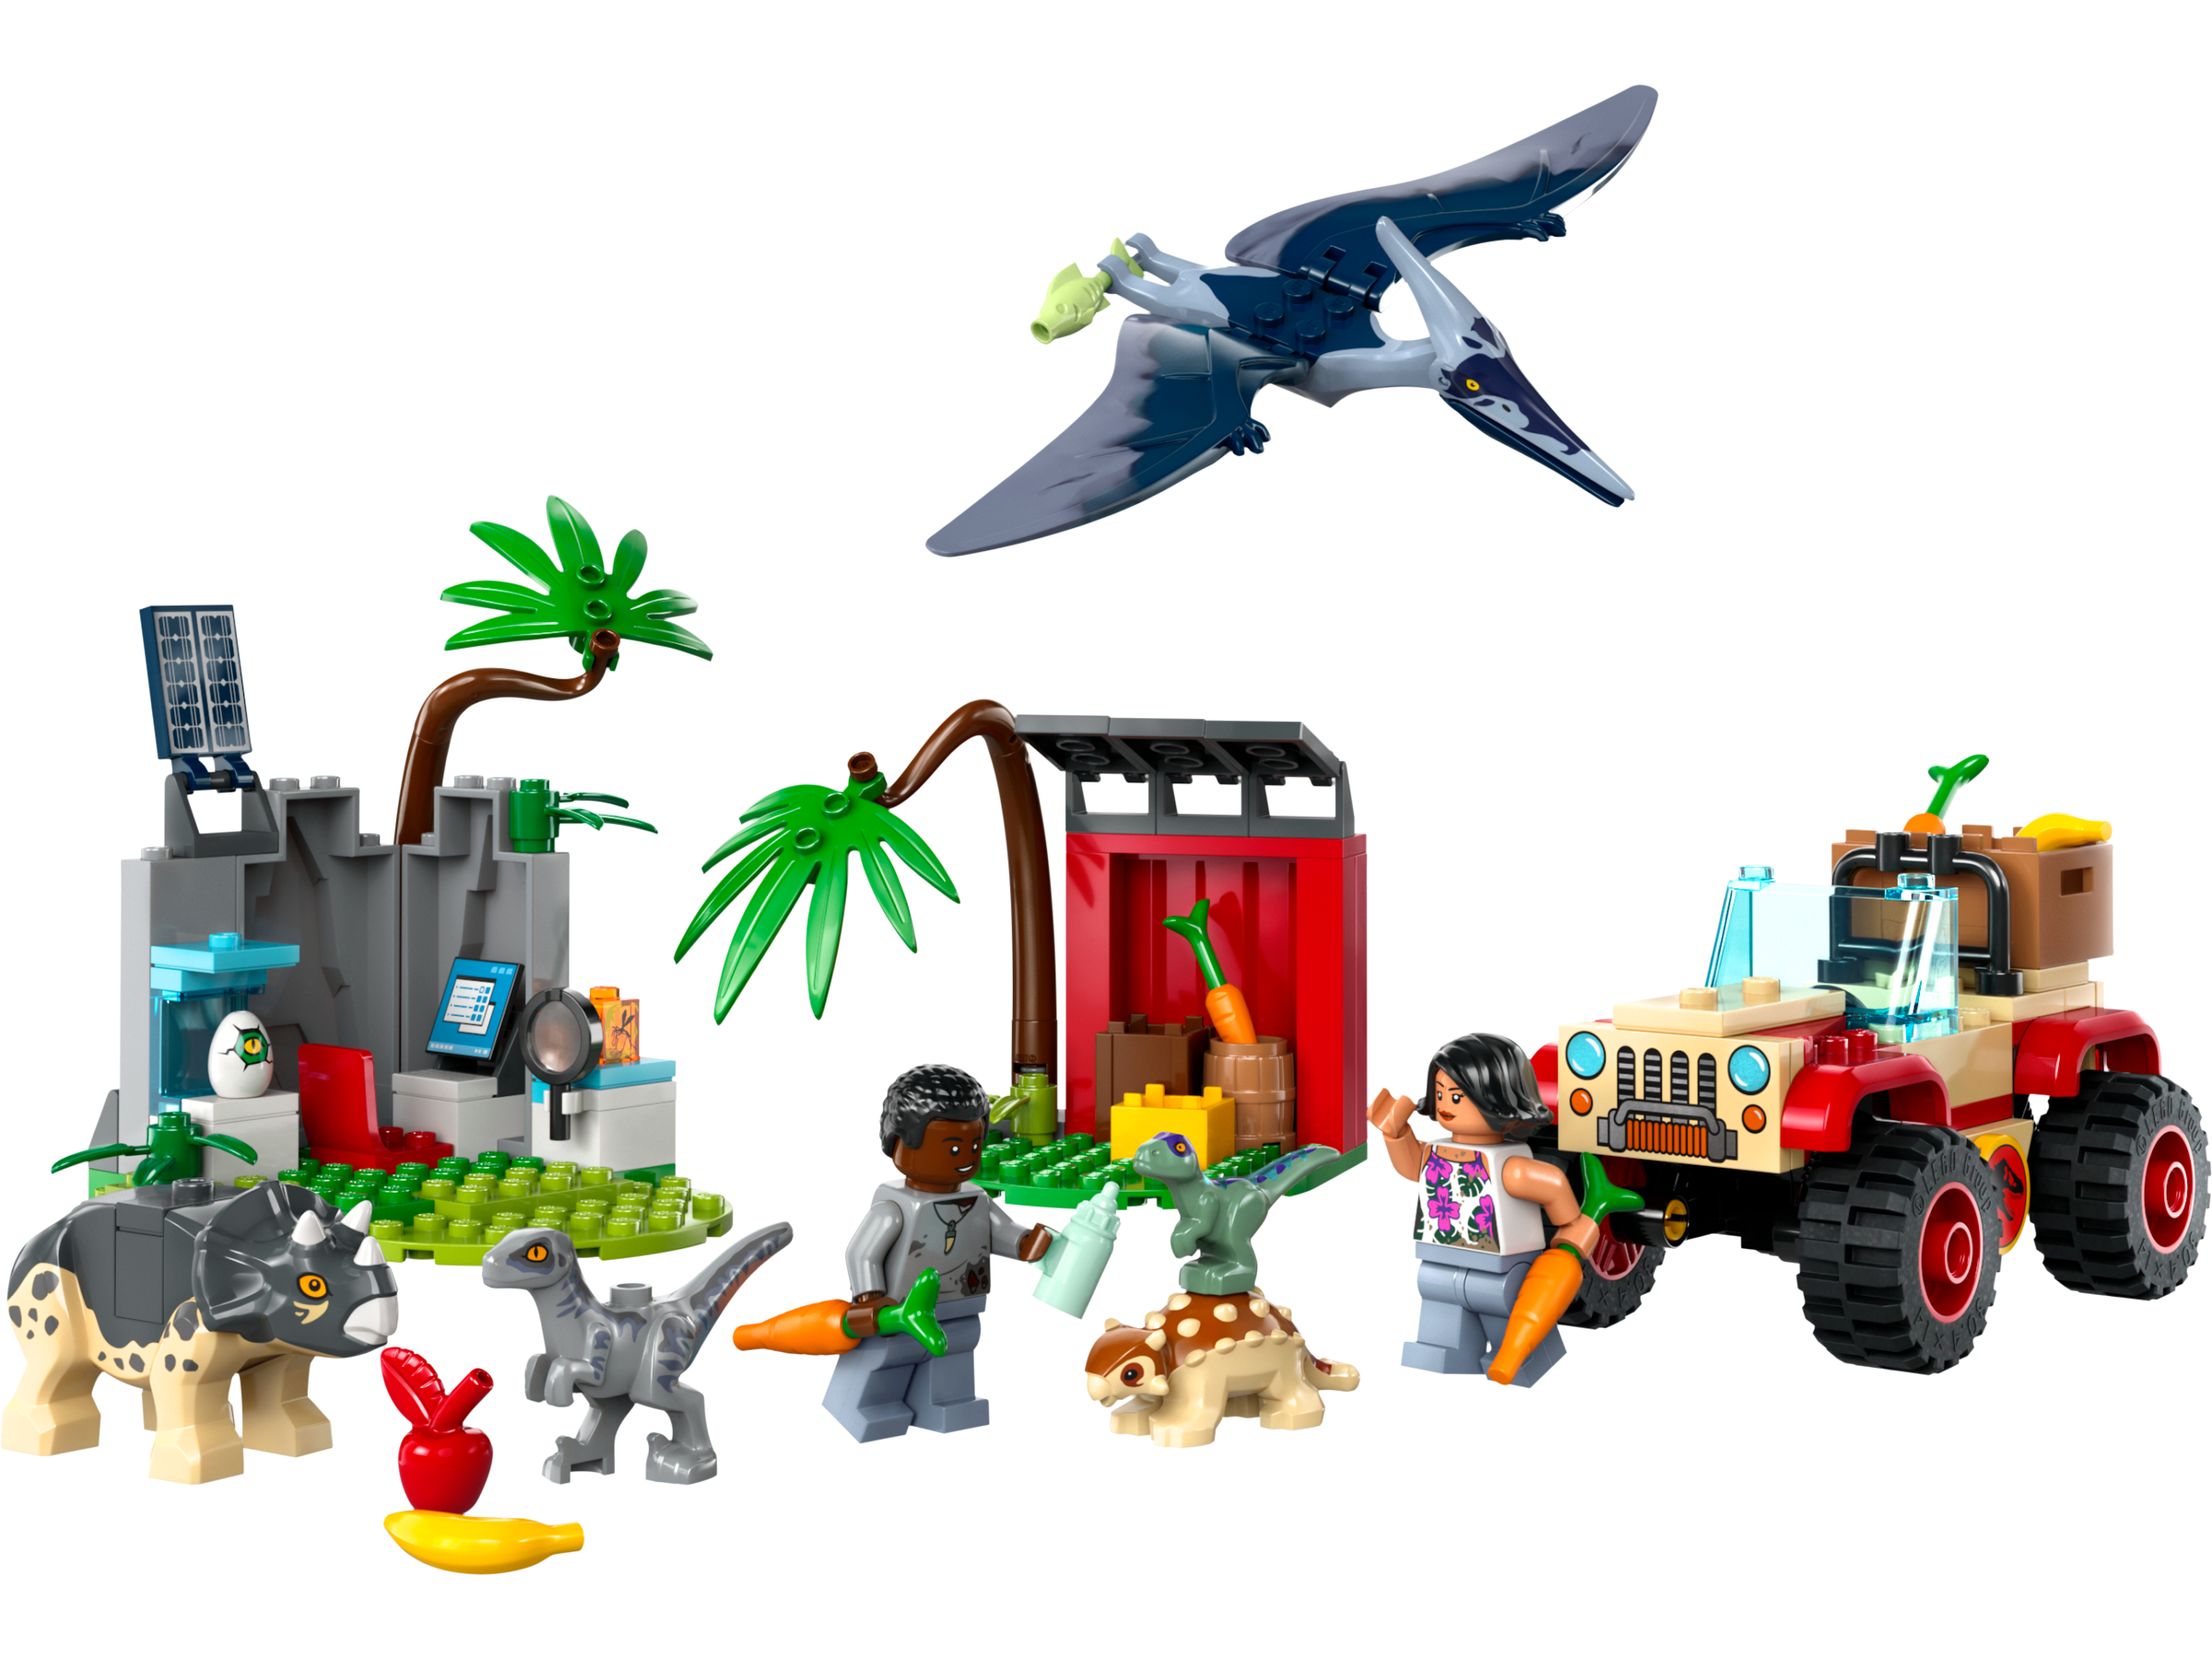 Lego 76963 Baby Dinosaur Rescue Centre